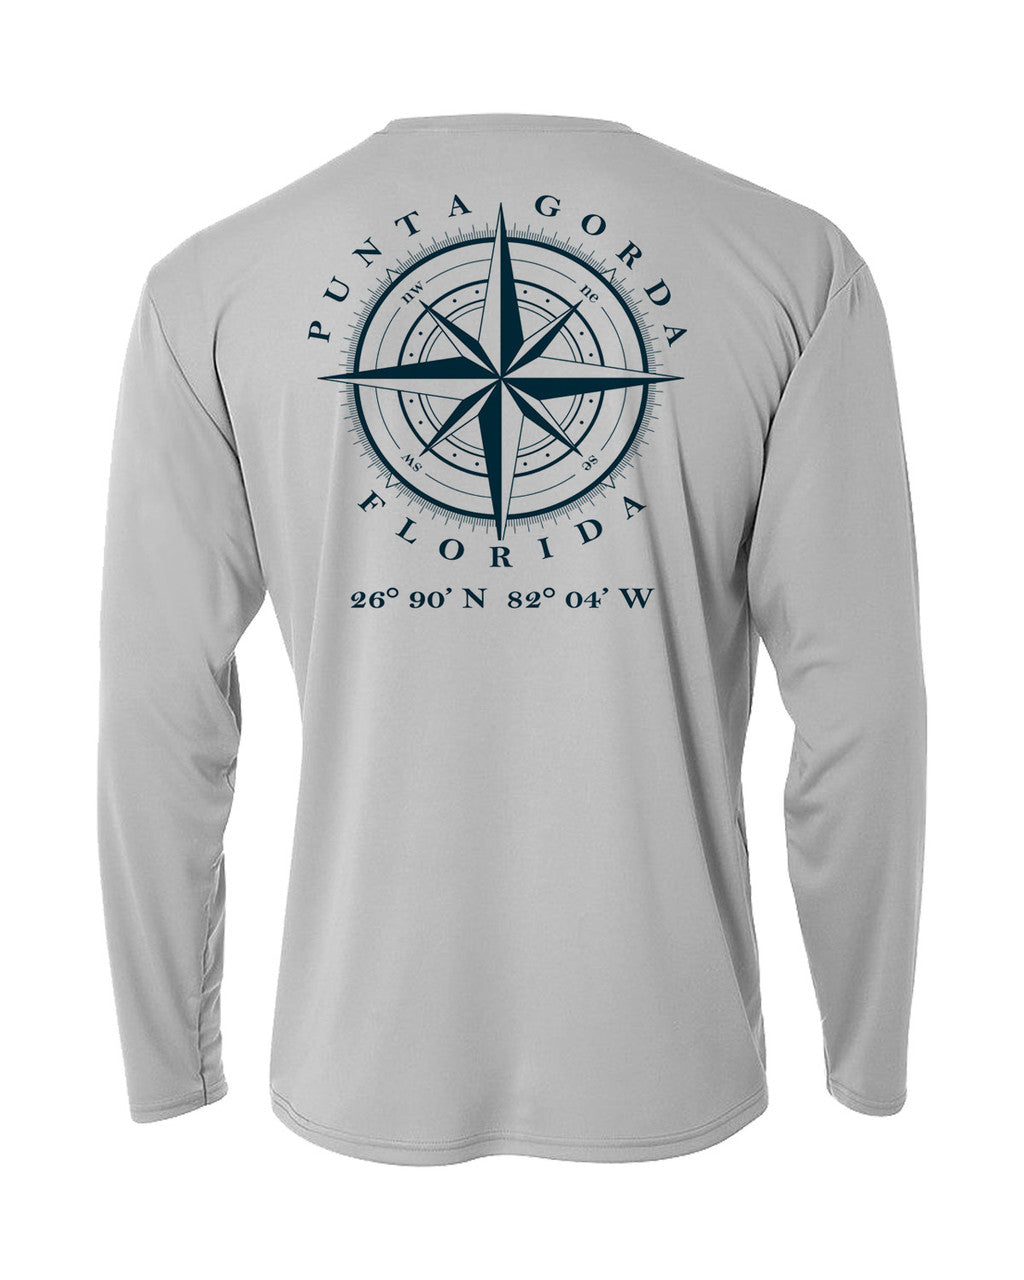 Punta Gorda Compass Long Sleeve Sun Protection Shirt